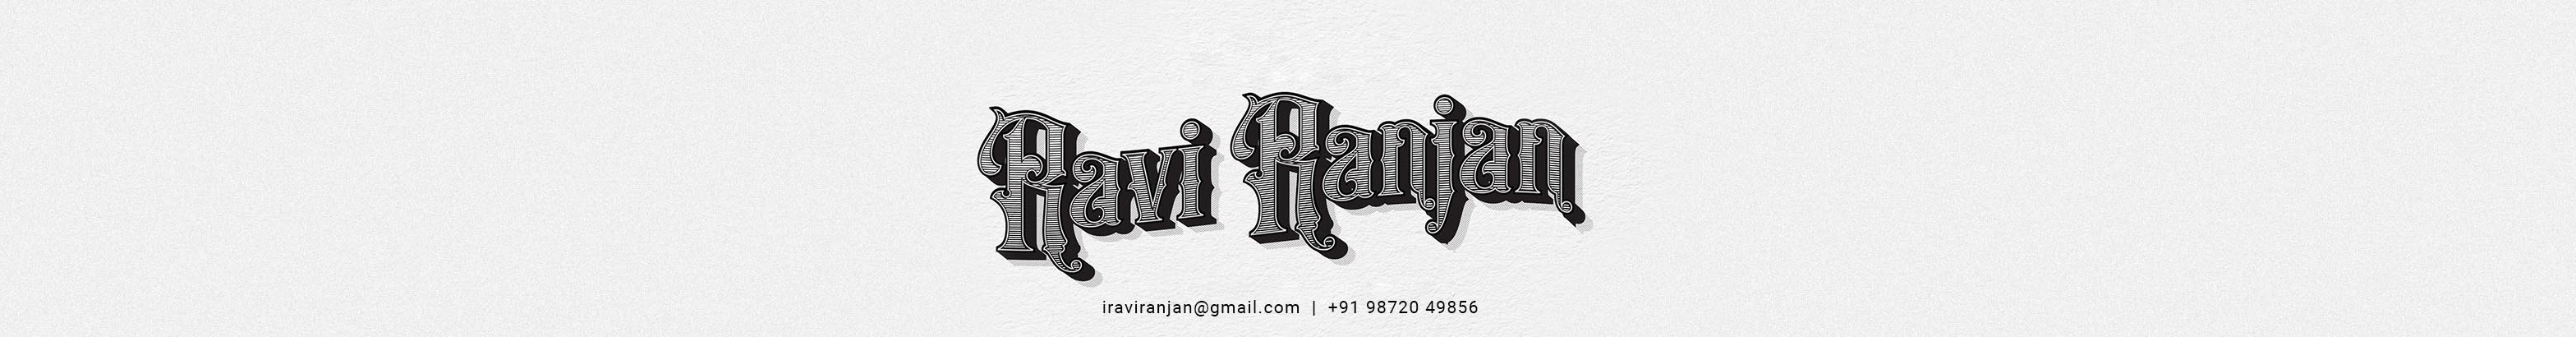 Ravi Ranjan's profile banner